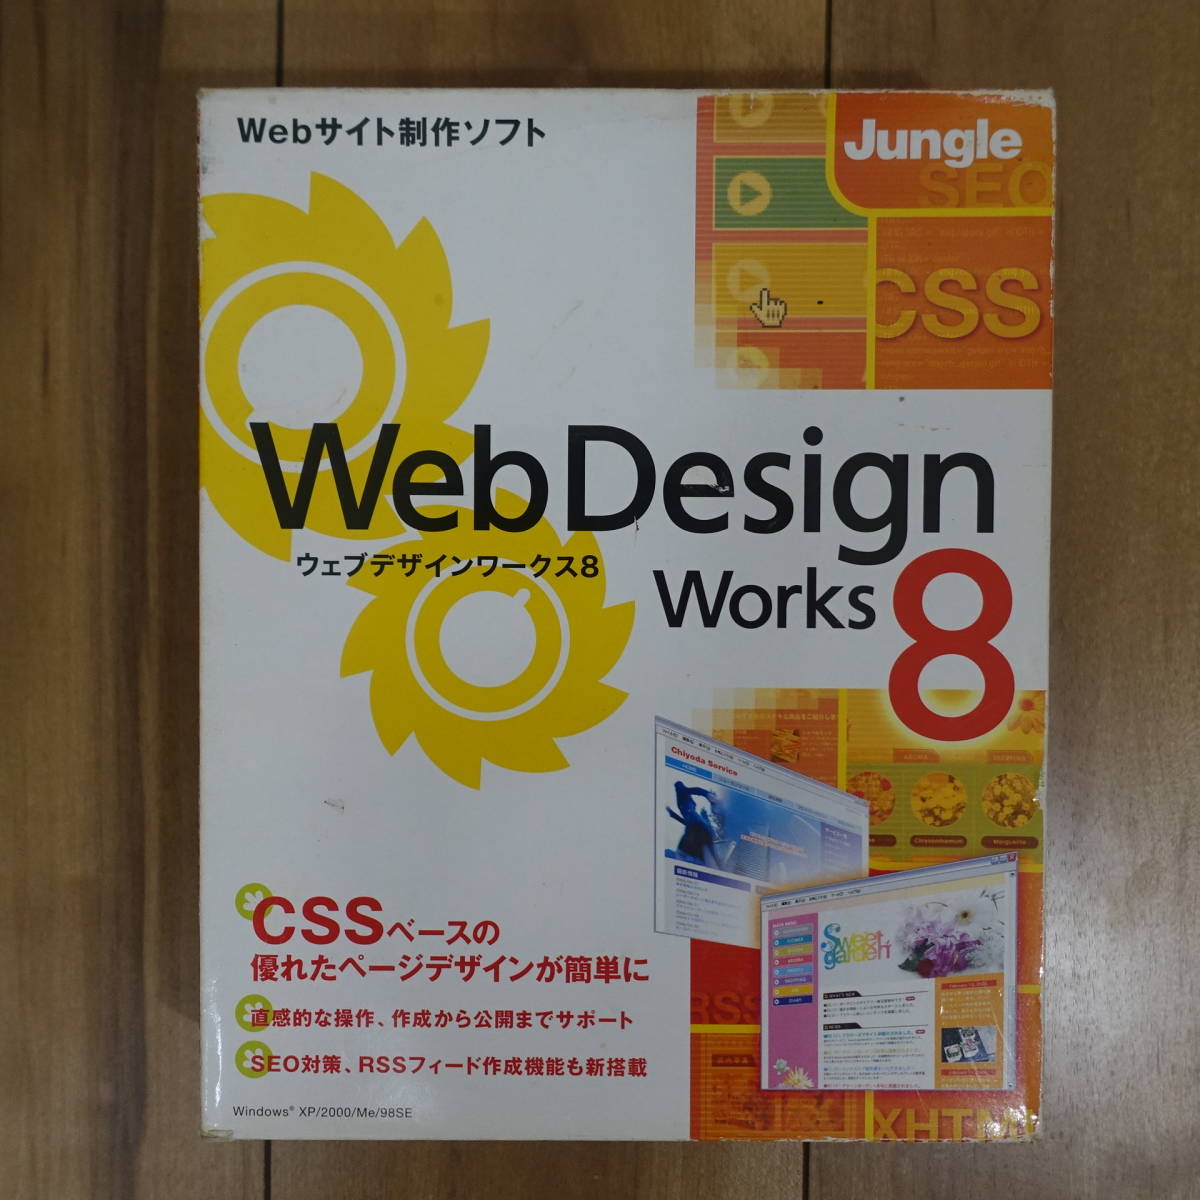 Web Design Works 8 Web site work soft Windows operation goods 